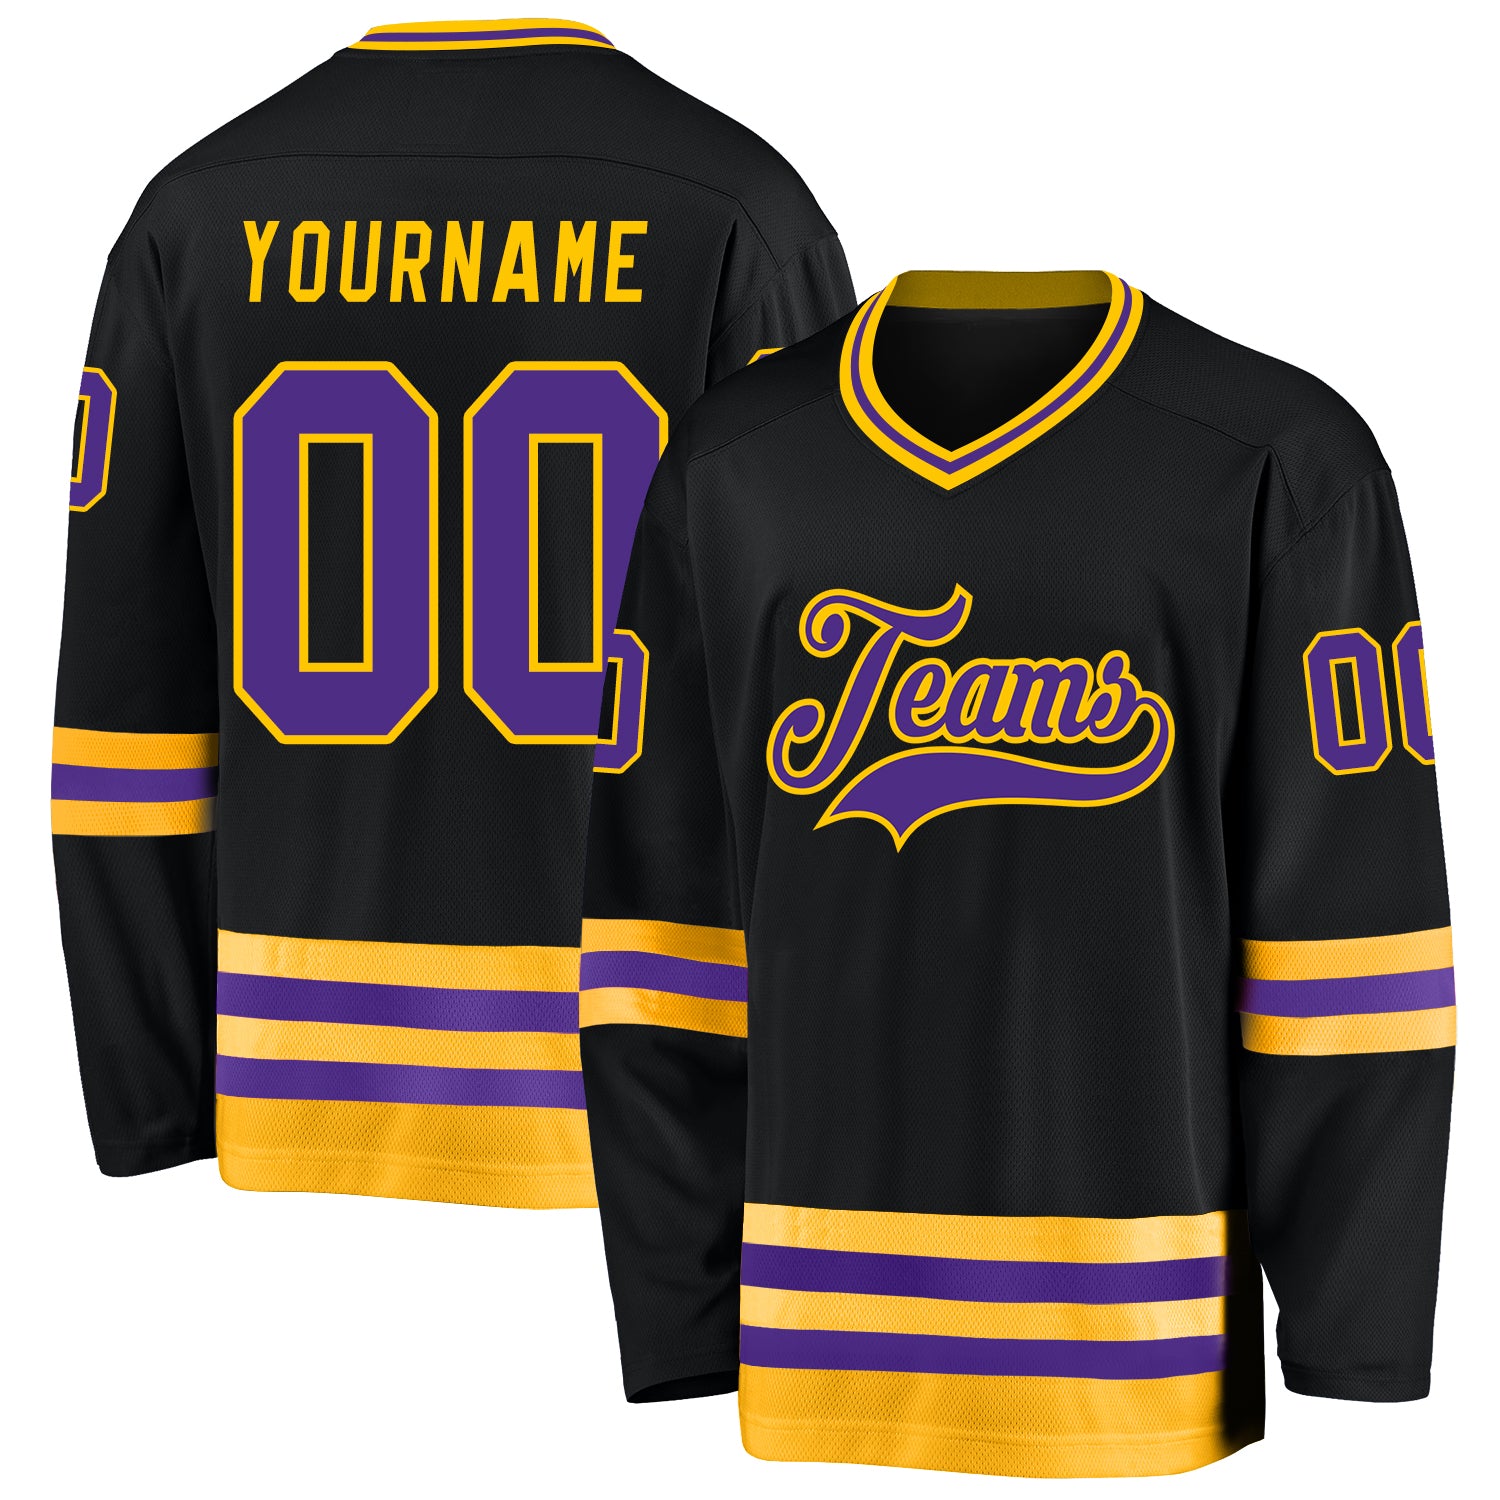 Personalized NHL Jersey Pittsburgh Penguins White/Purple Hockey